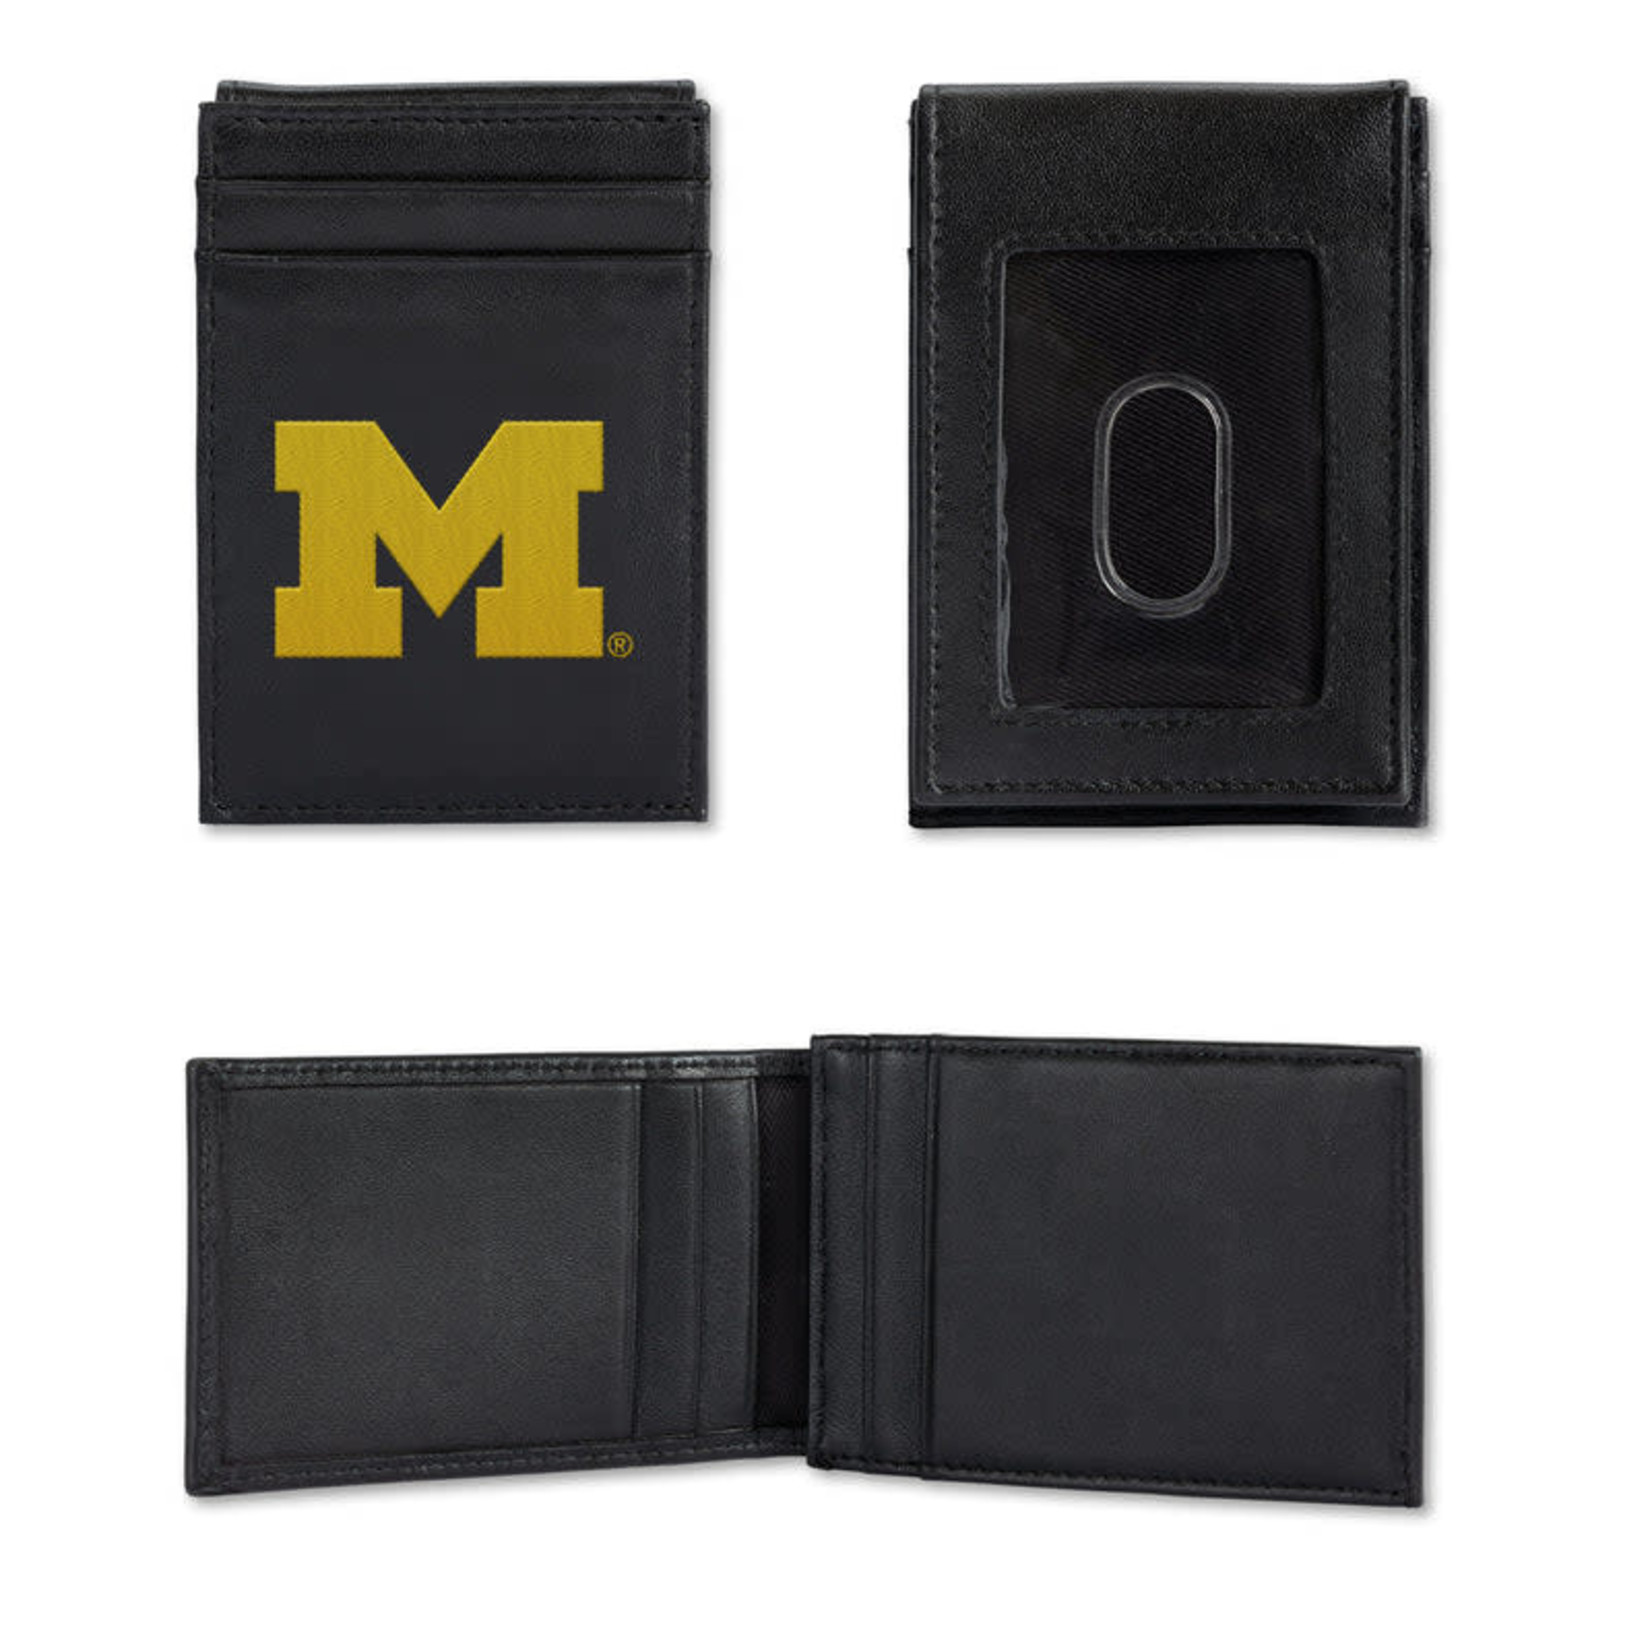 Rico NCAA Michigan University Embroidered Front Pocket Wallet